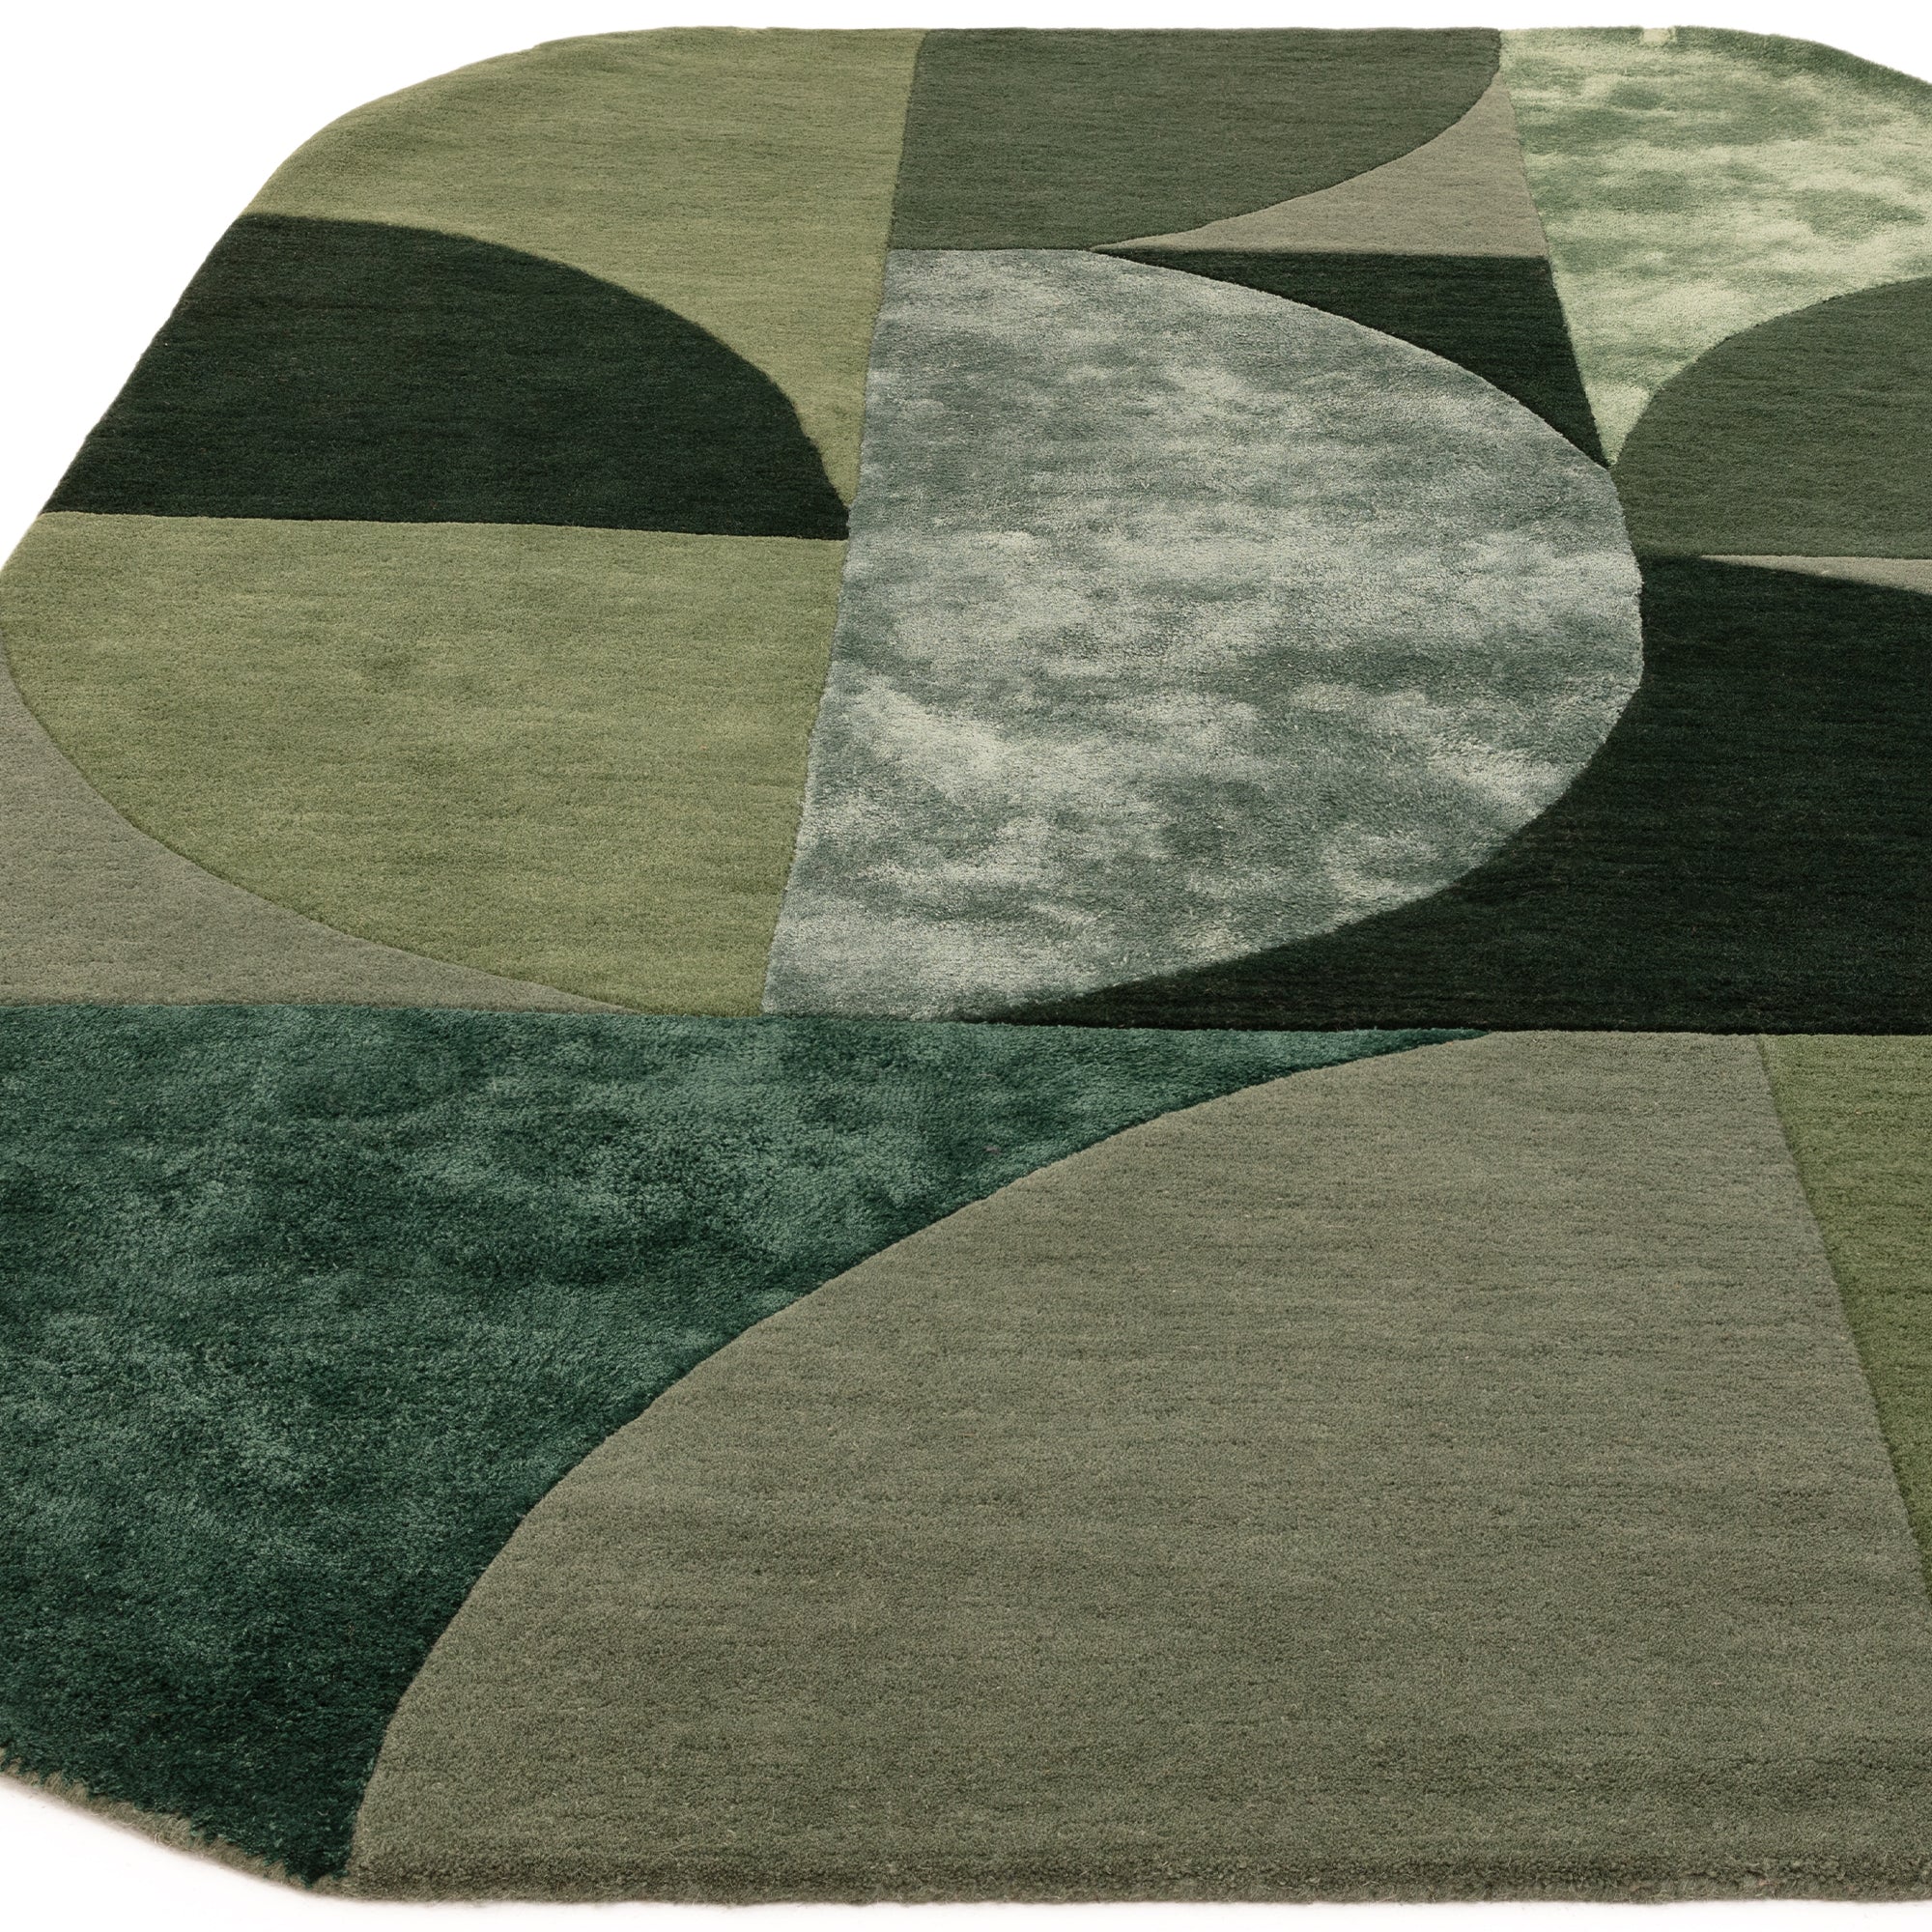 Matrix 75 Oval Forest green rug